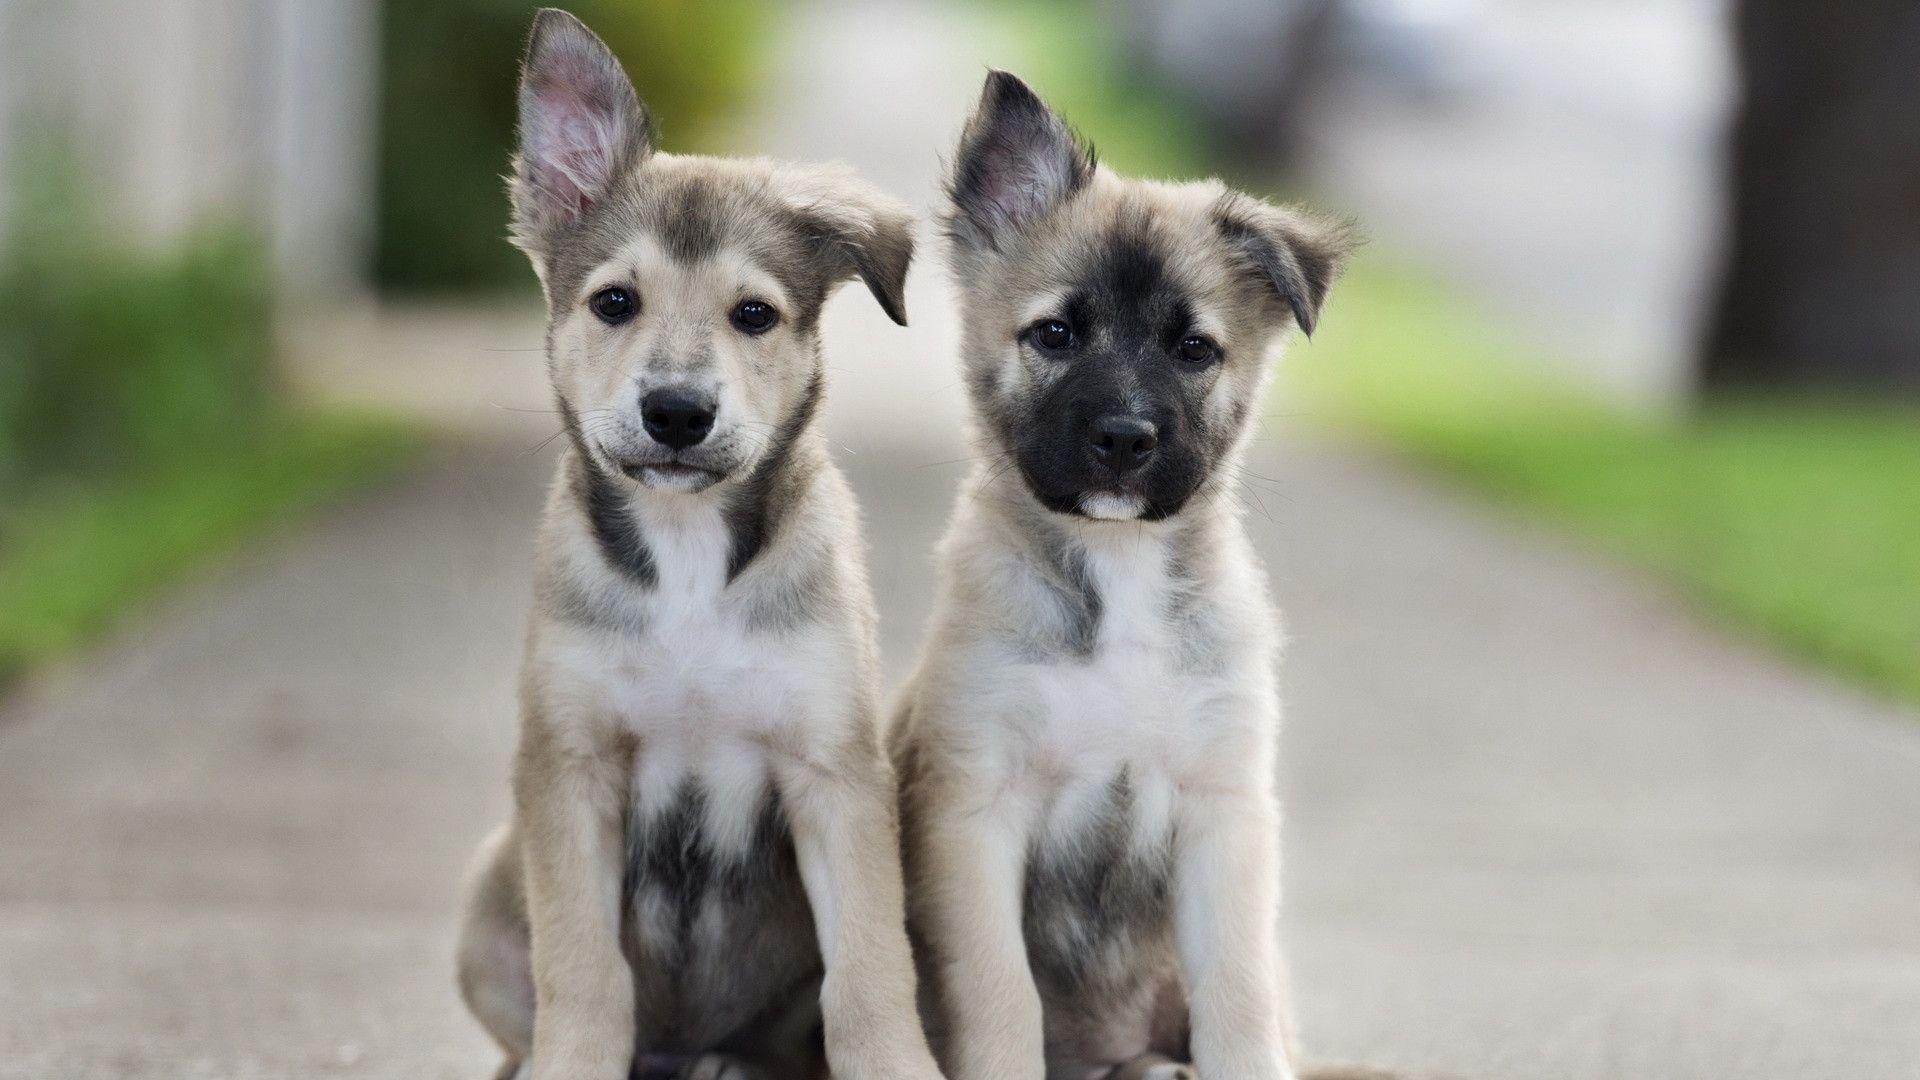 Cute puppies Wallpaper